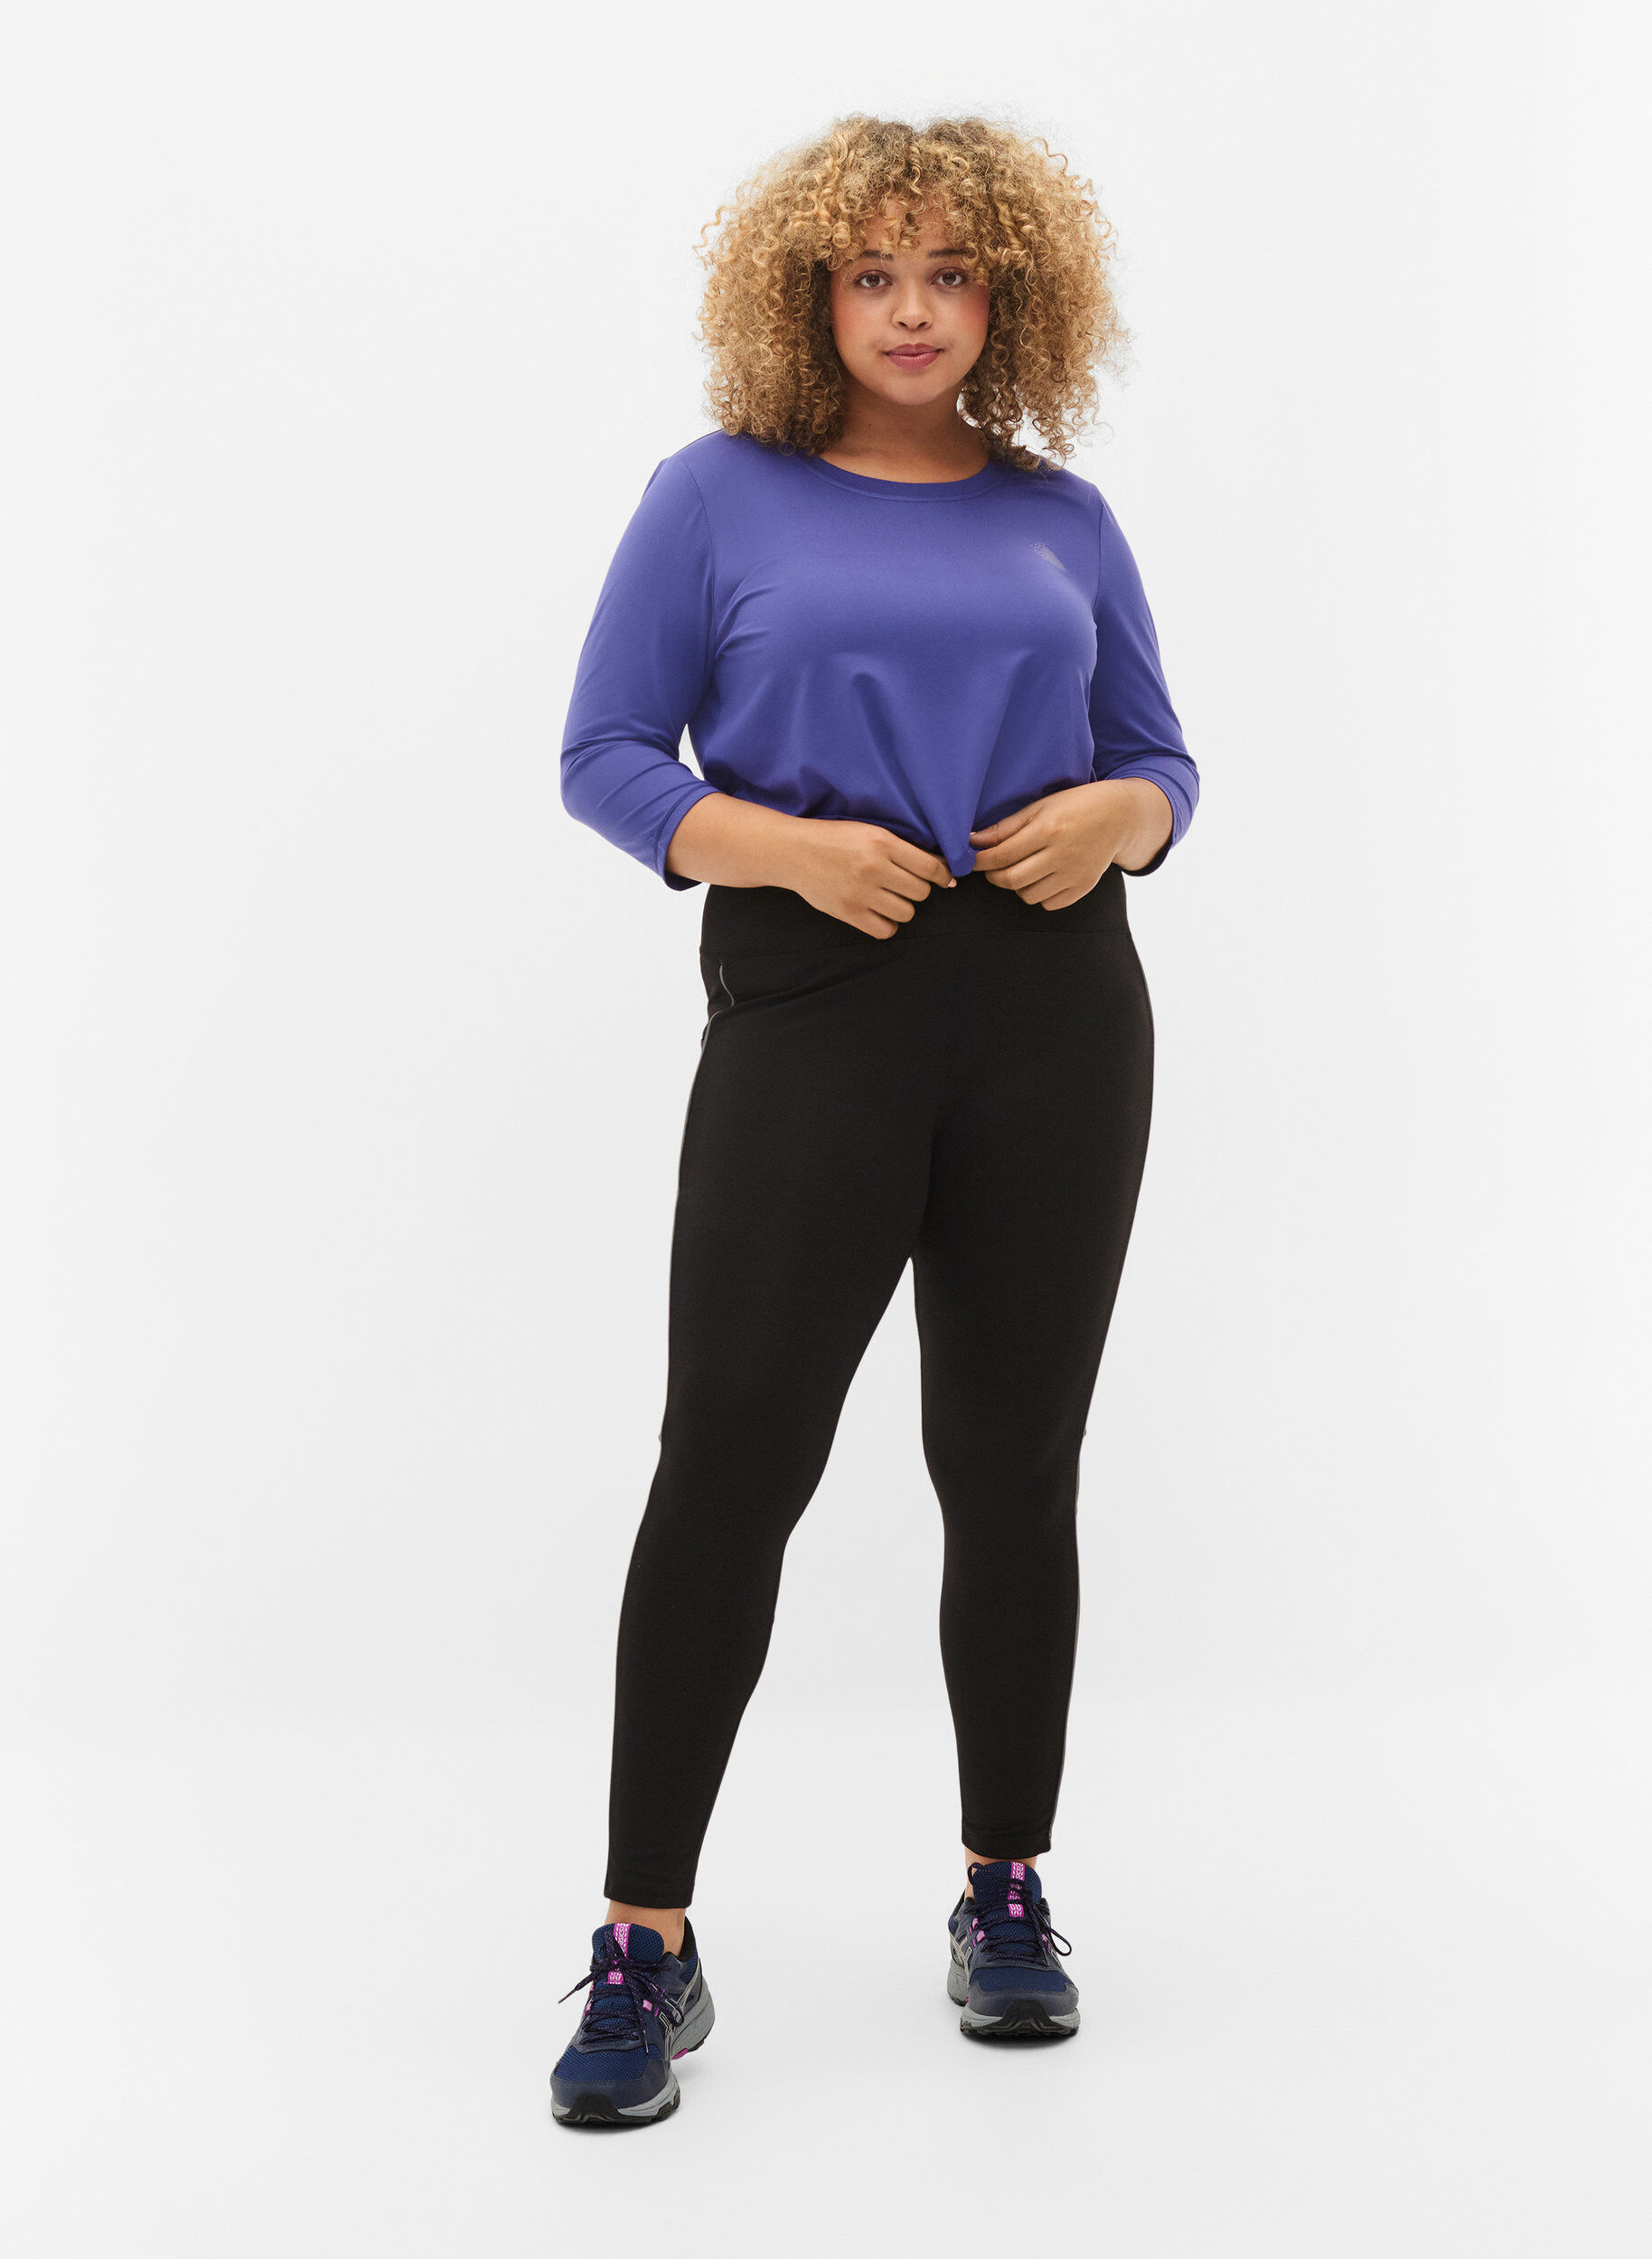 discount 80% WOMEN FASHION Trousers Sports BC Leggings Black XL 